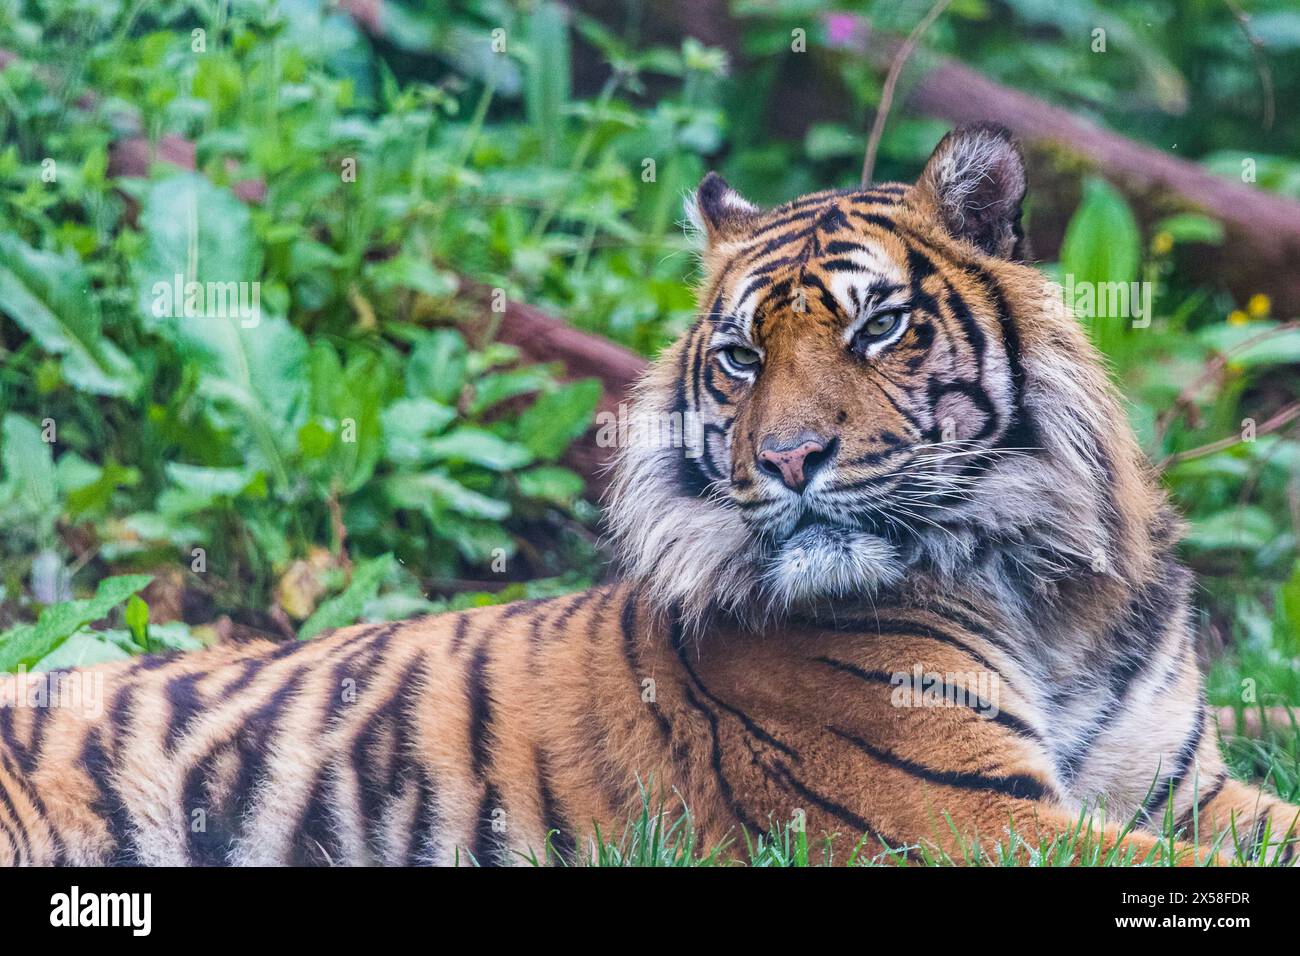 Gros plan d'un tigre de Sumatra paressant dans l'herbe. Banque D'Images